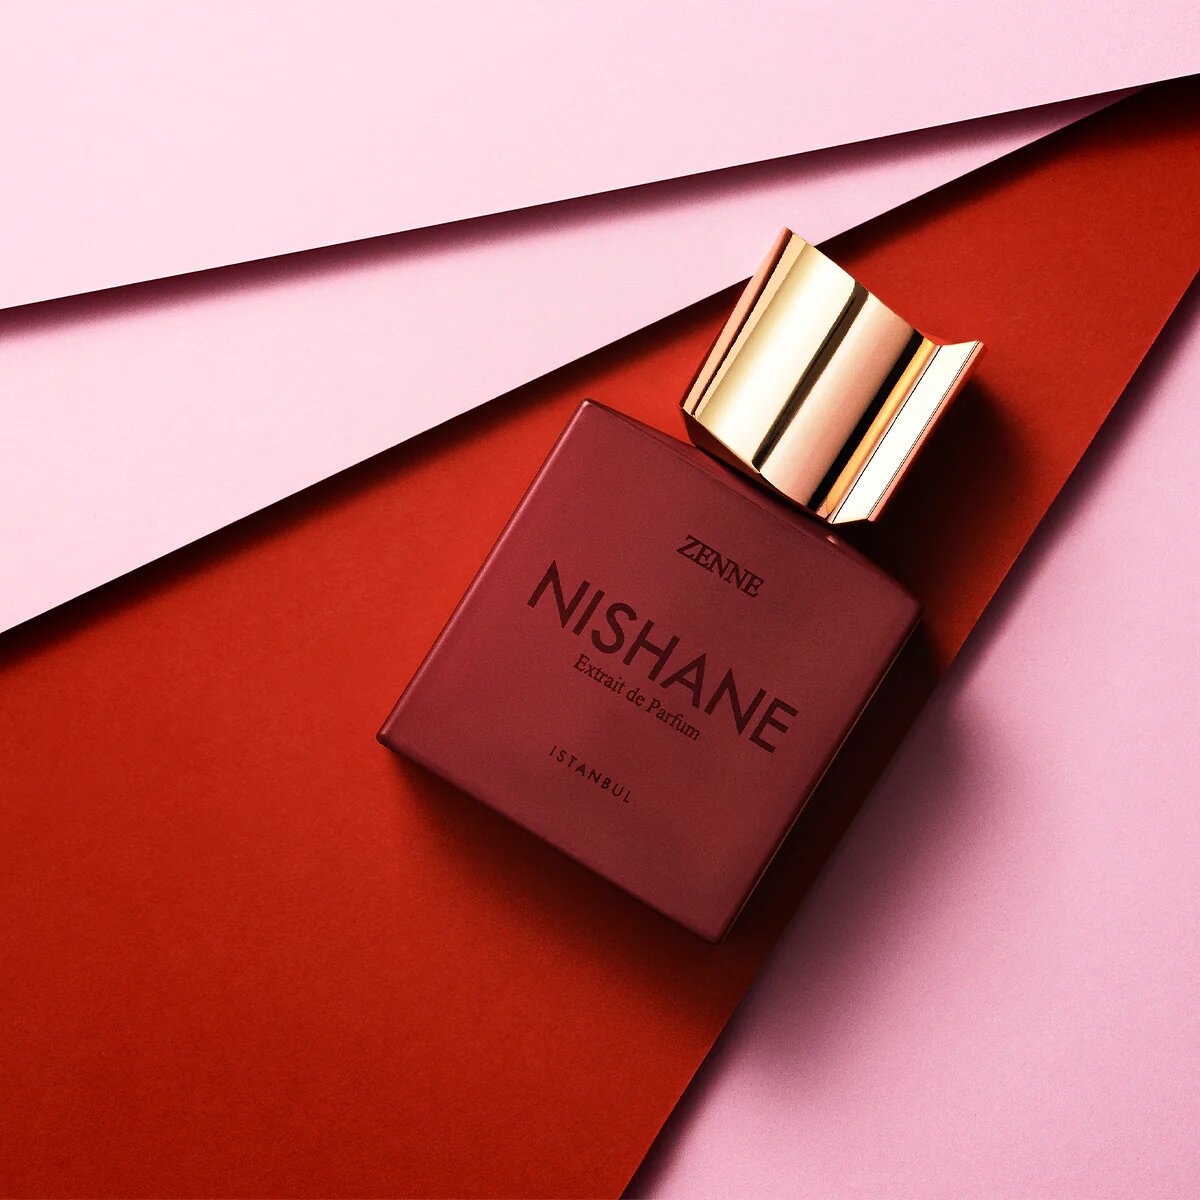 Nishane Zenne Extrait de Parfum 50ML